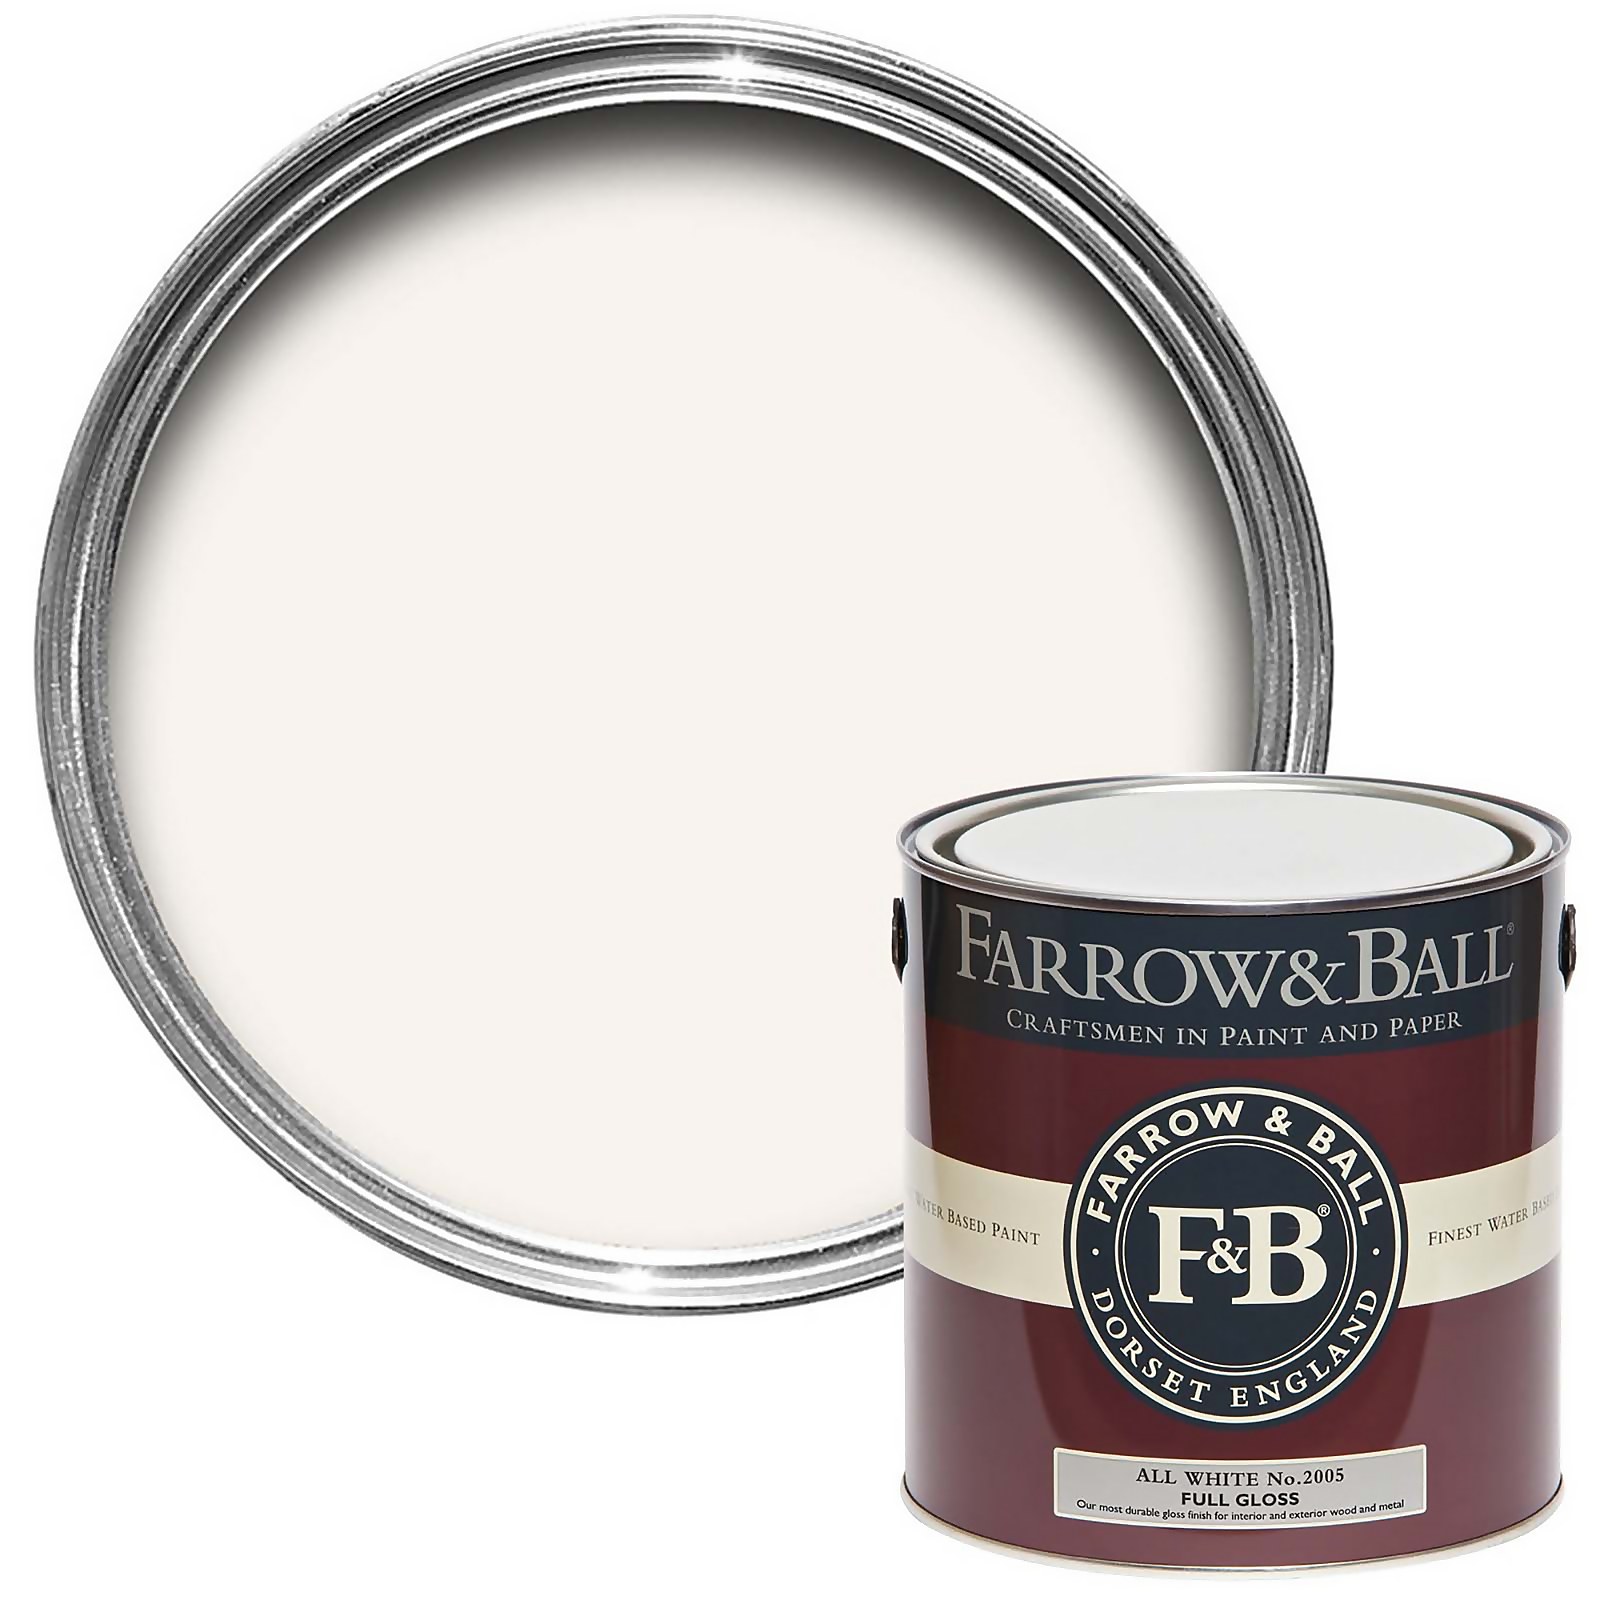 Farrow & Ball Full Gloss Paint All White No.2005 - 2.5L